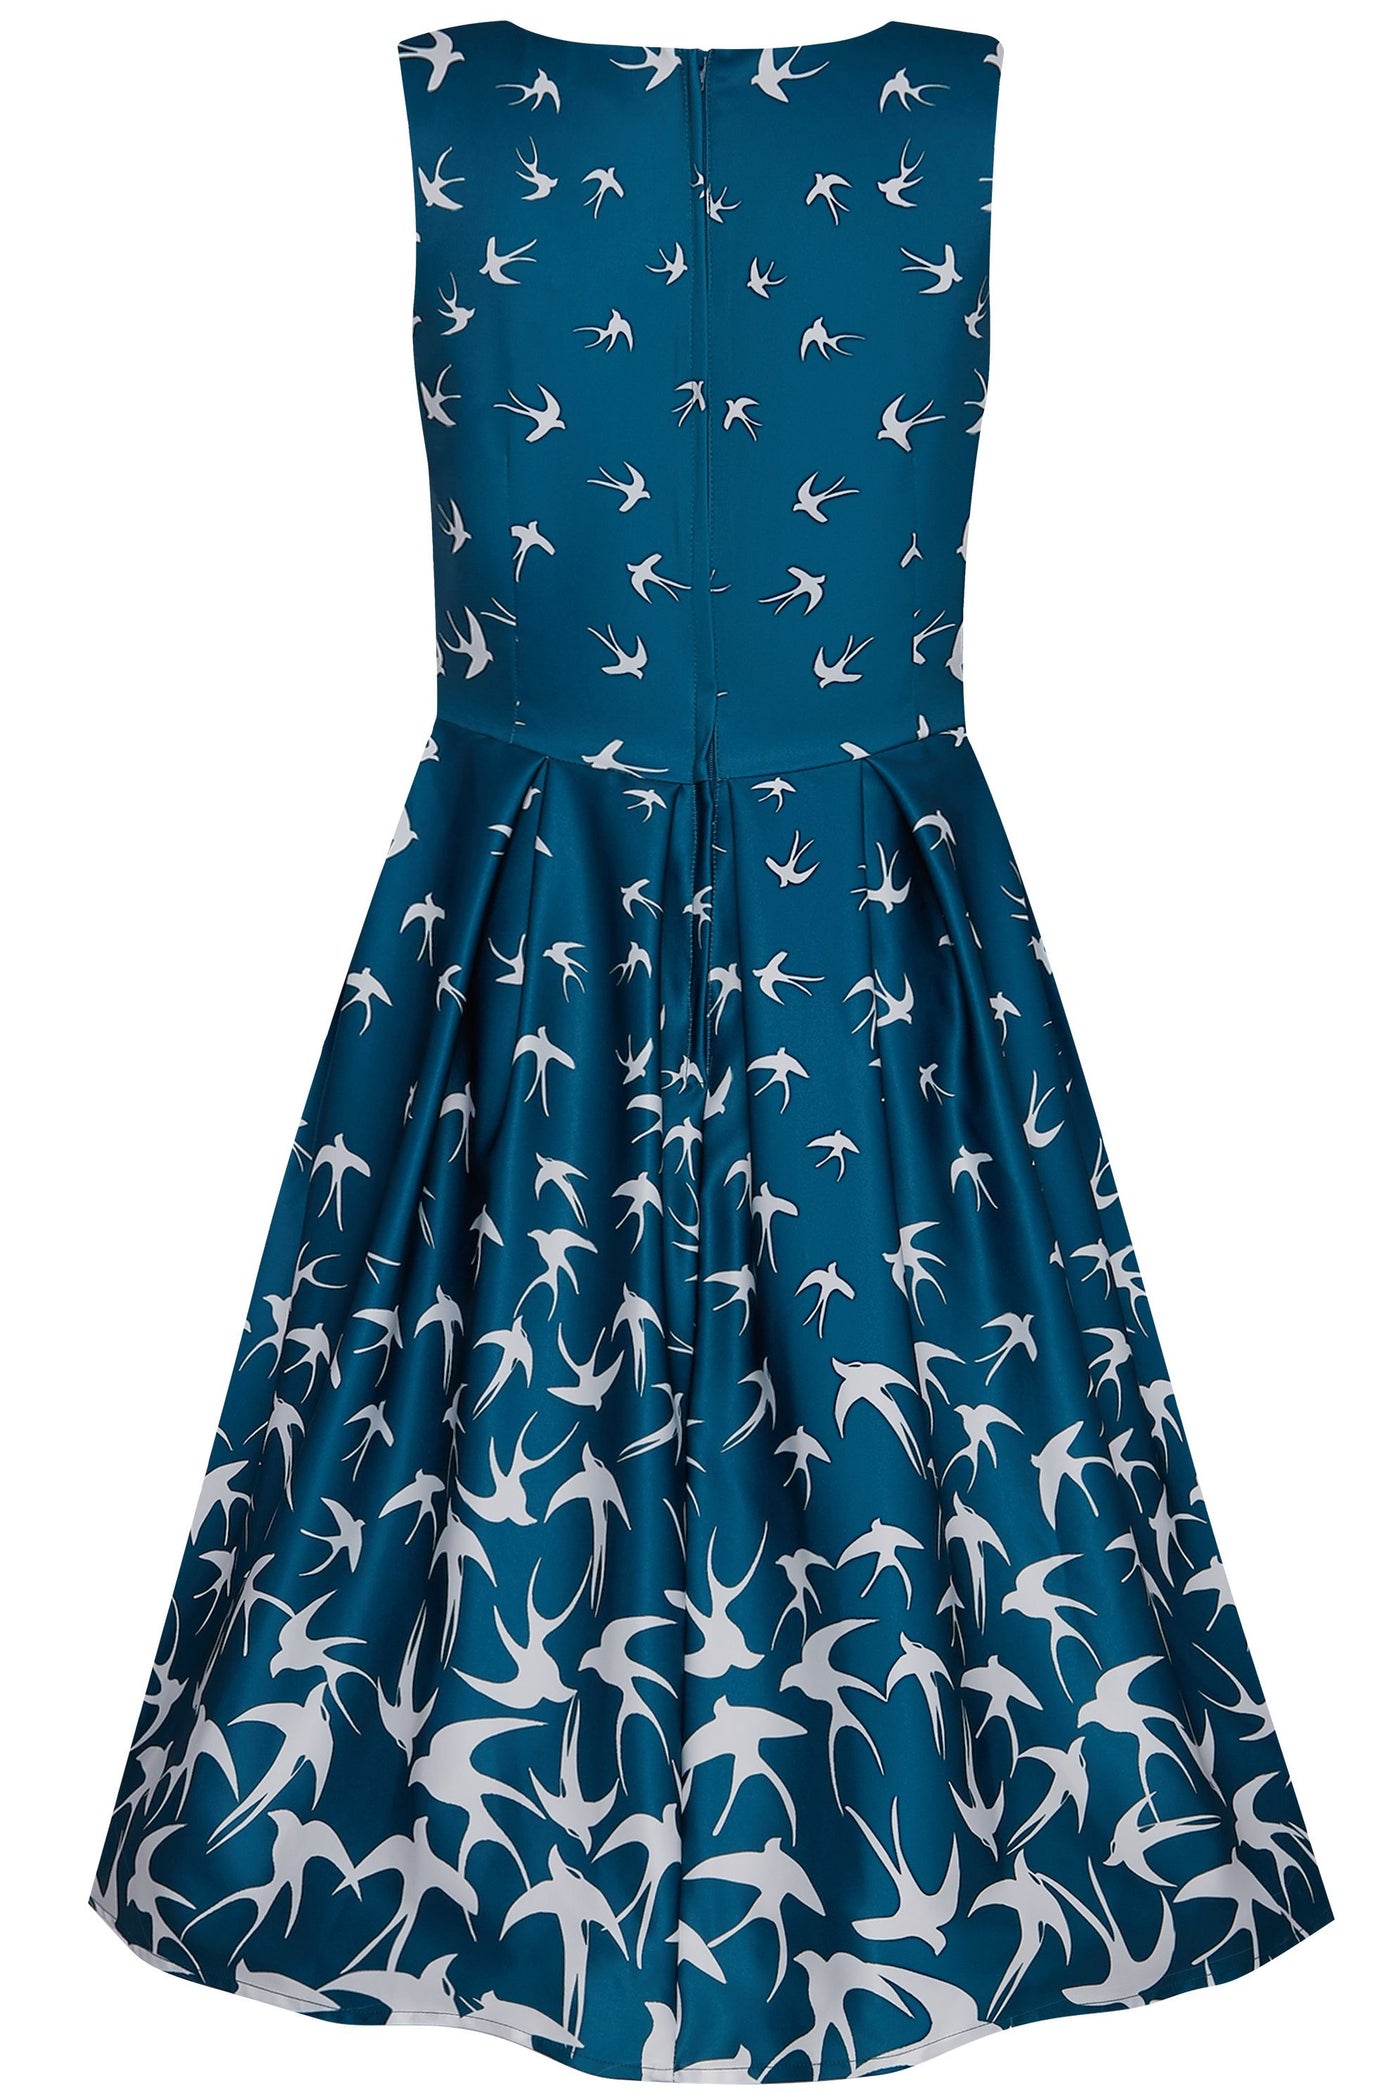 Annie Blue Swing Dress with Raising Swallow Birds